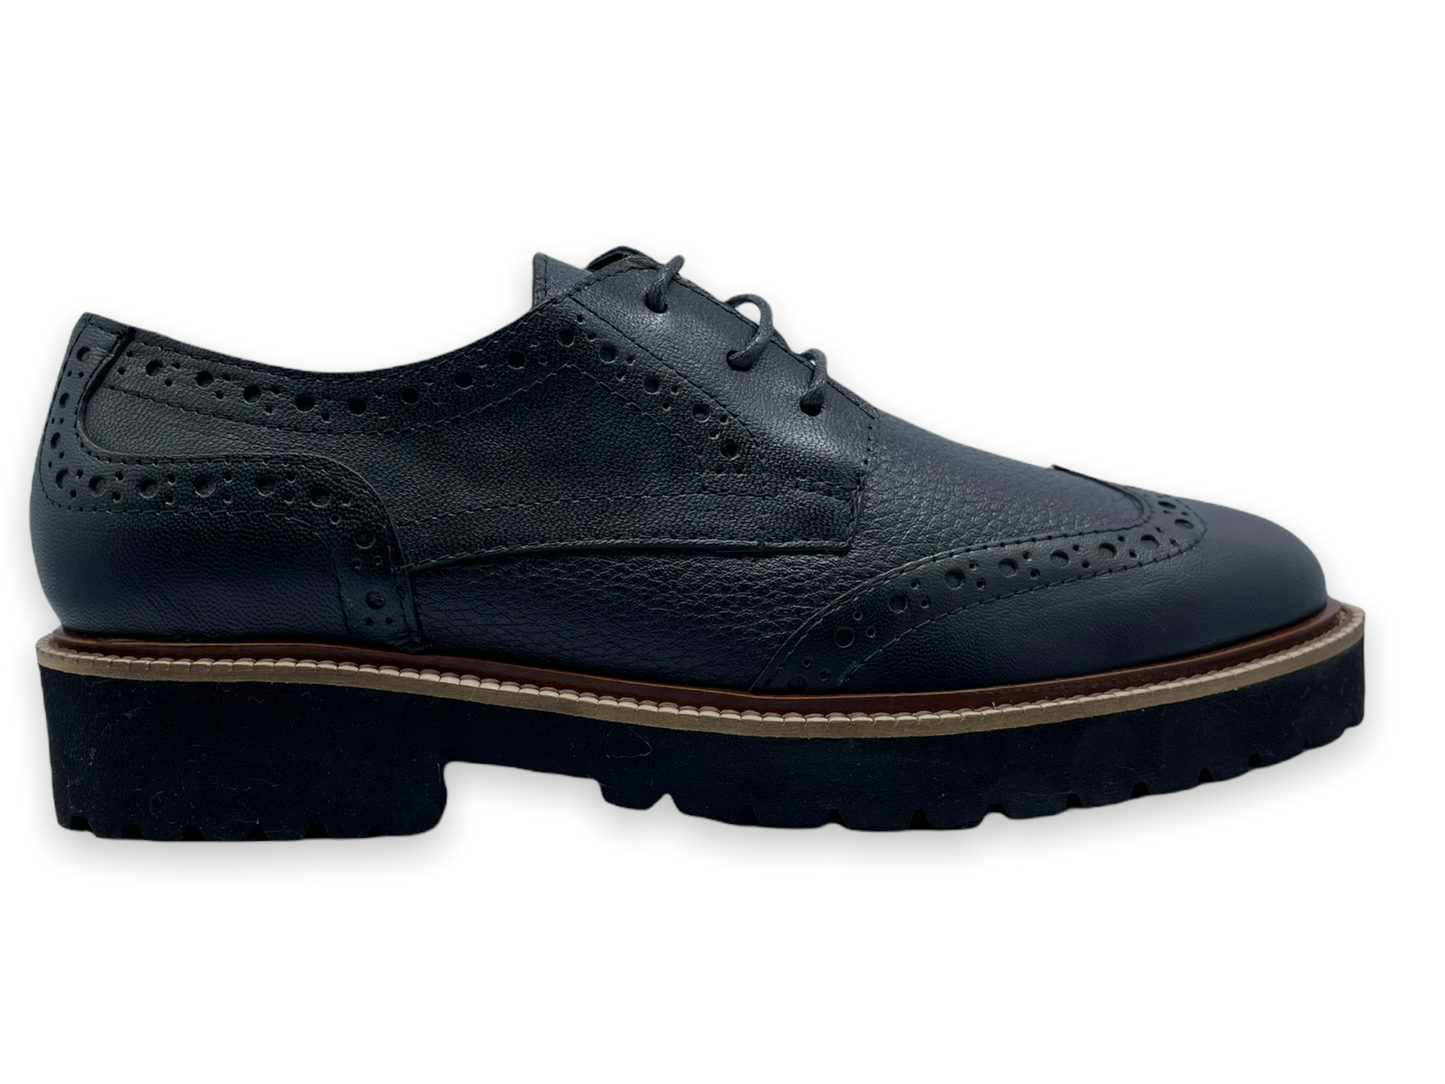 The Tora Black Leather Flat Shoe Final Sale!